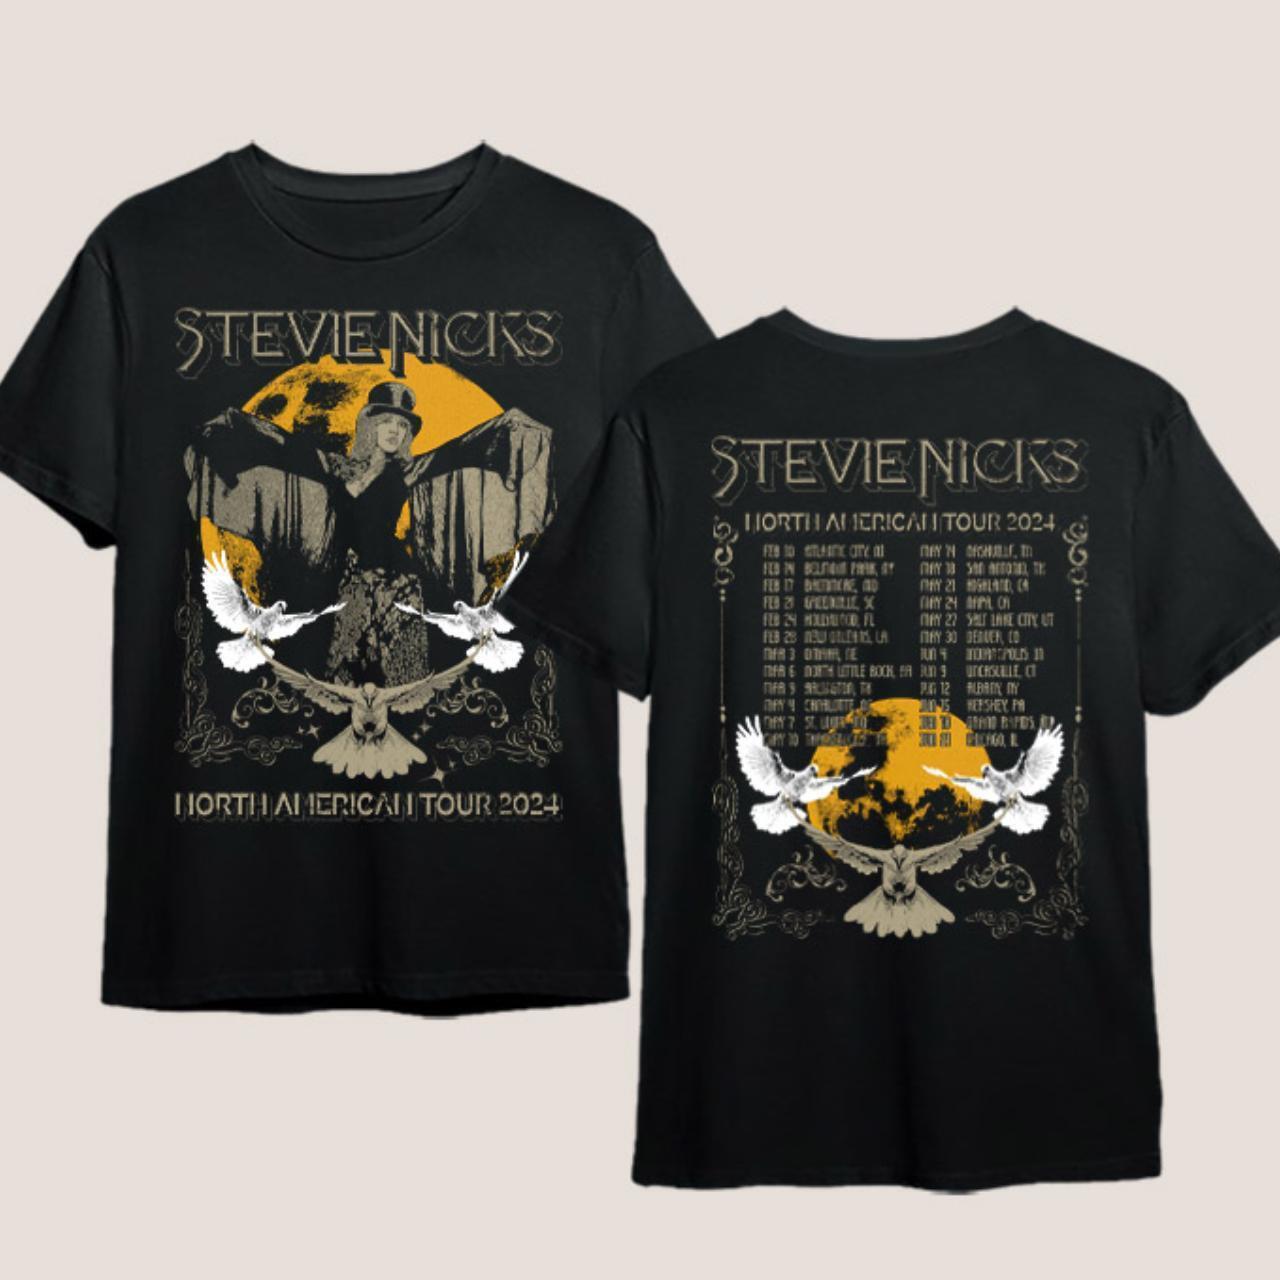 Stevie Nicks North American tour 2024 basic black 2 sided T shirt NH10100